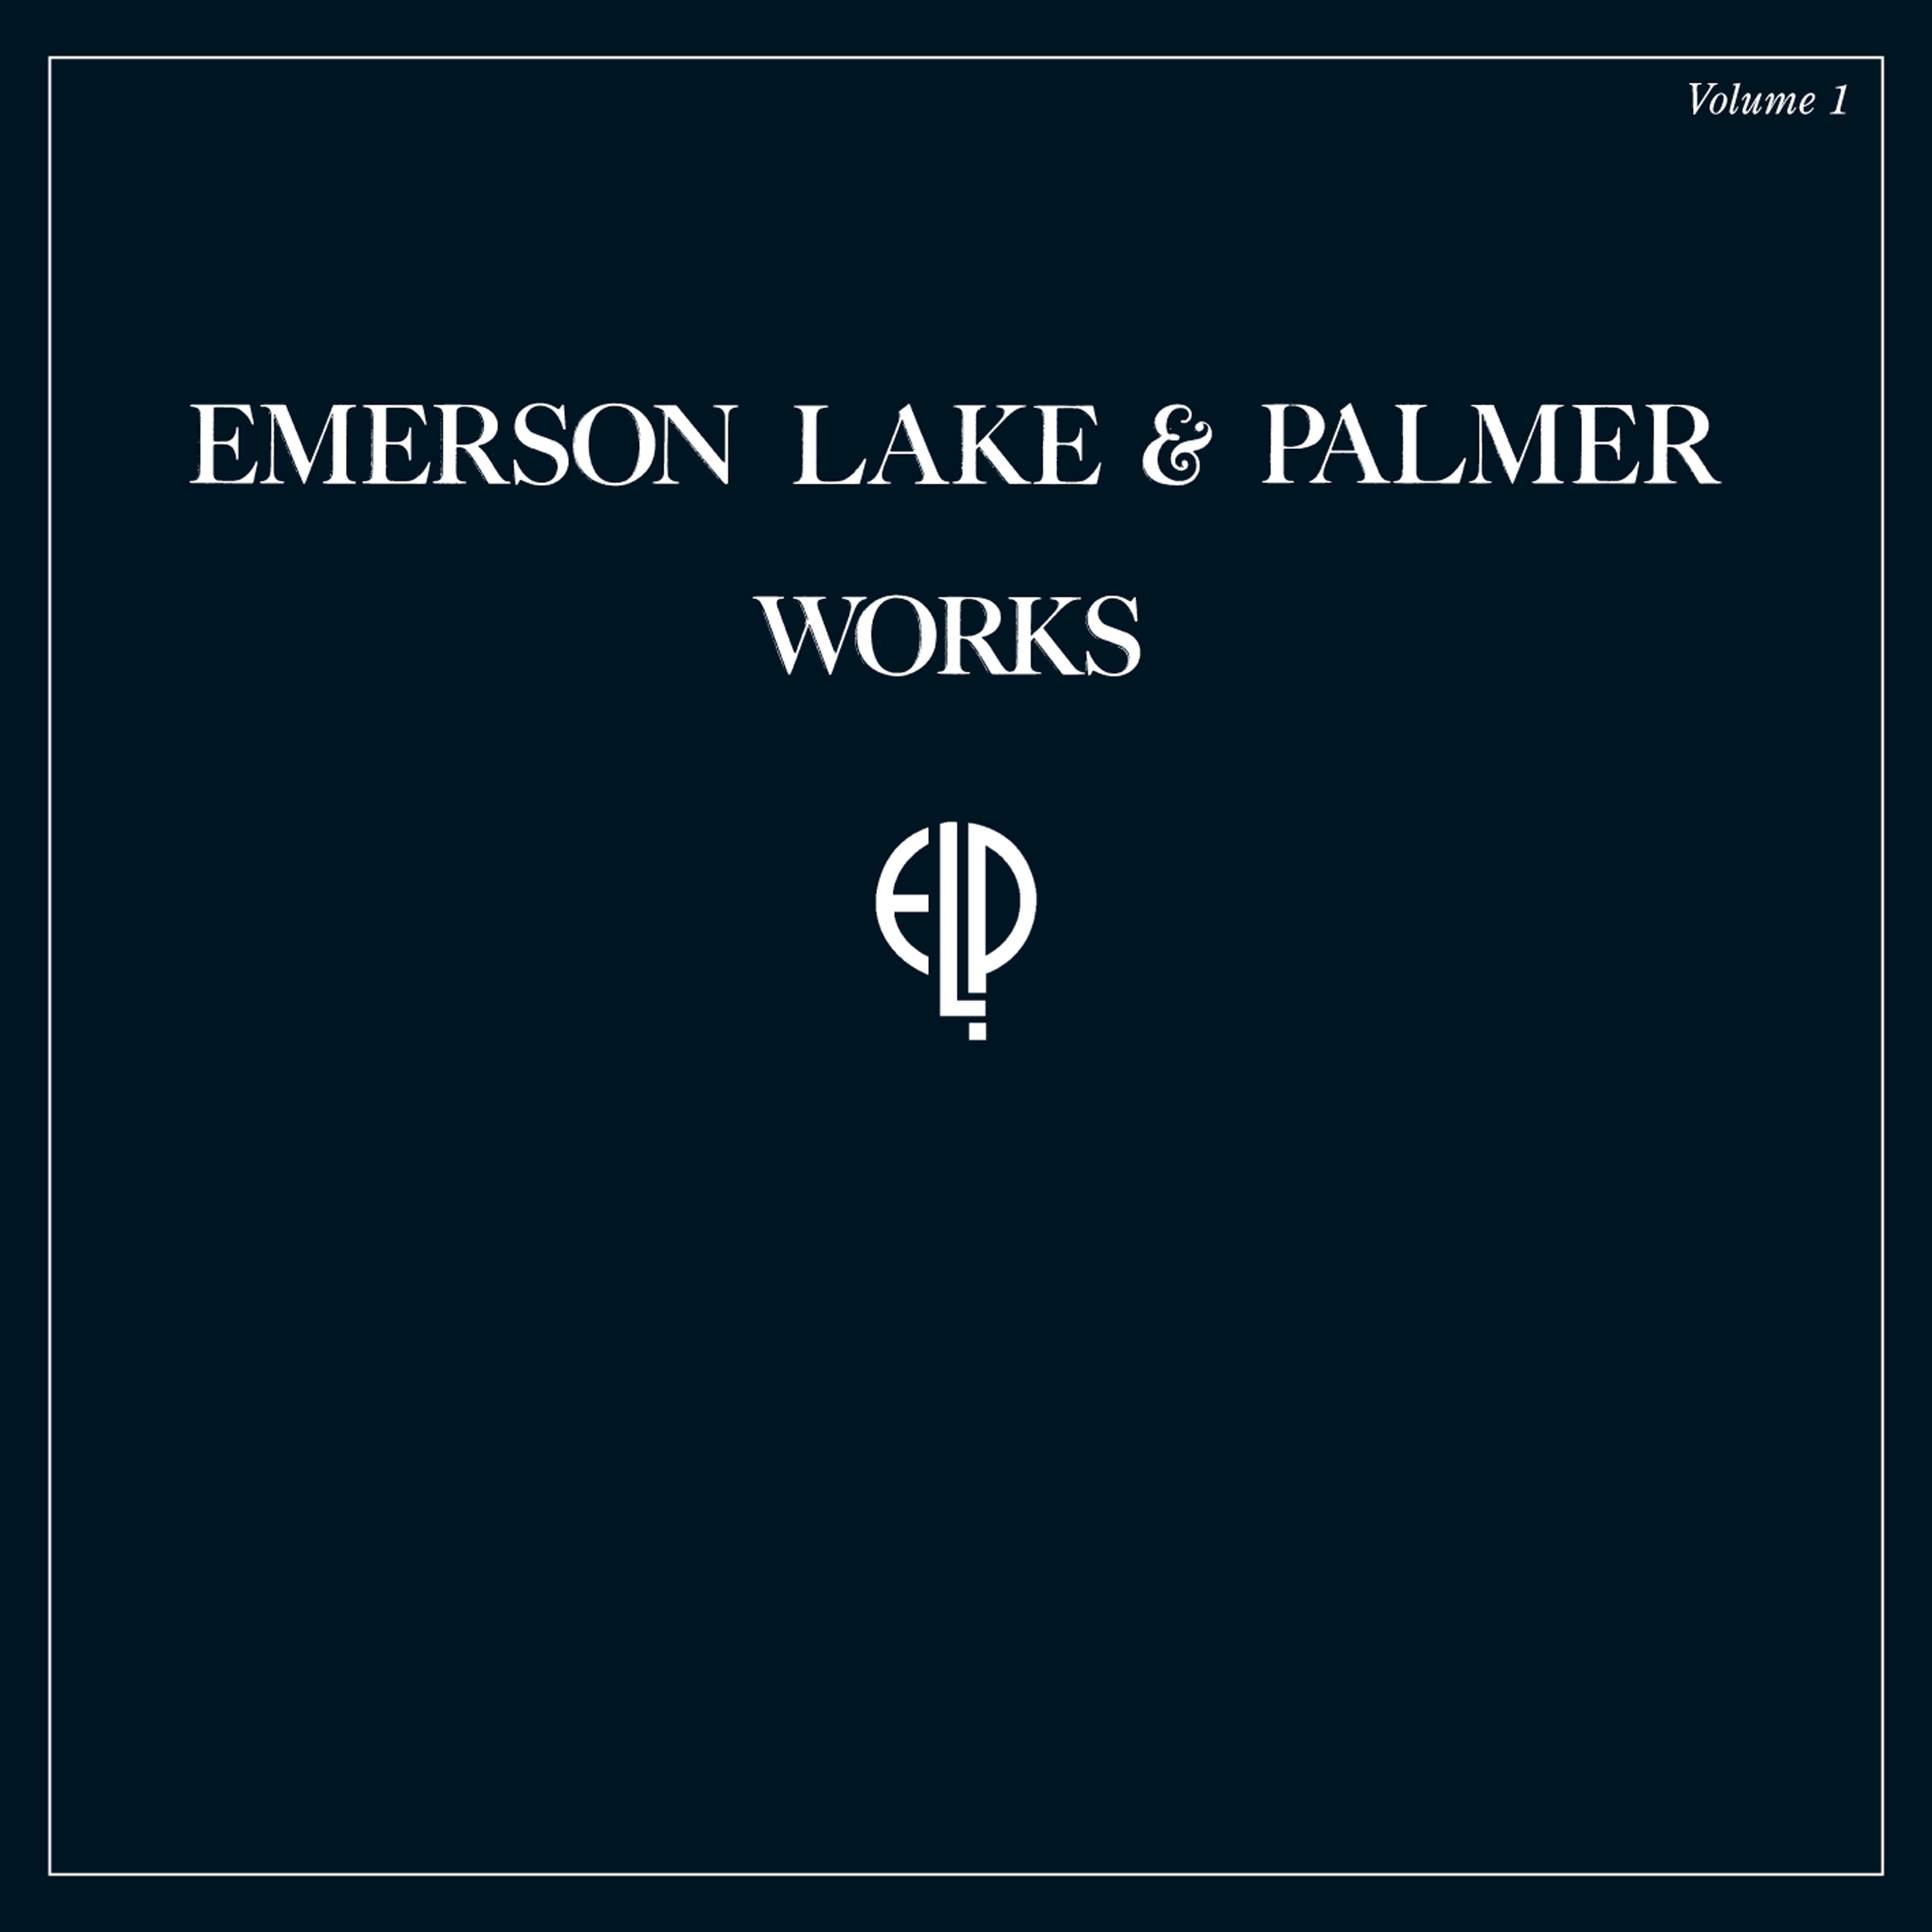 Emerson, Lake & Palmer - Works, Volume 1 (1977/2017) [HDTracks FLAC 24bit/96kHz]